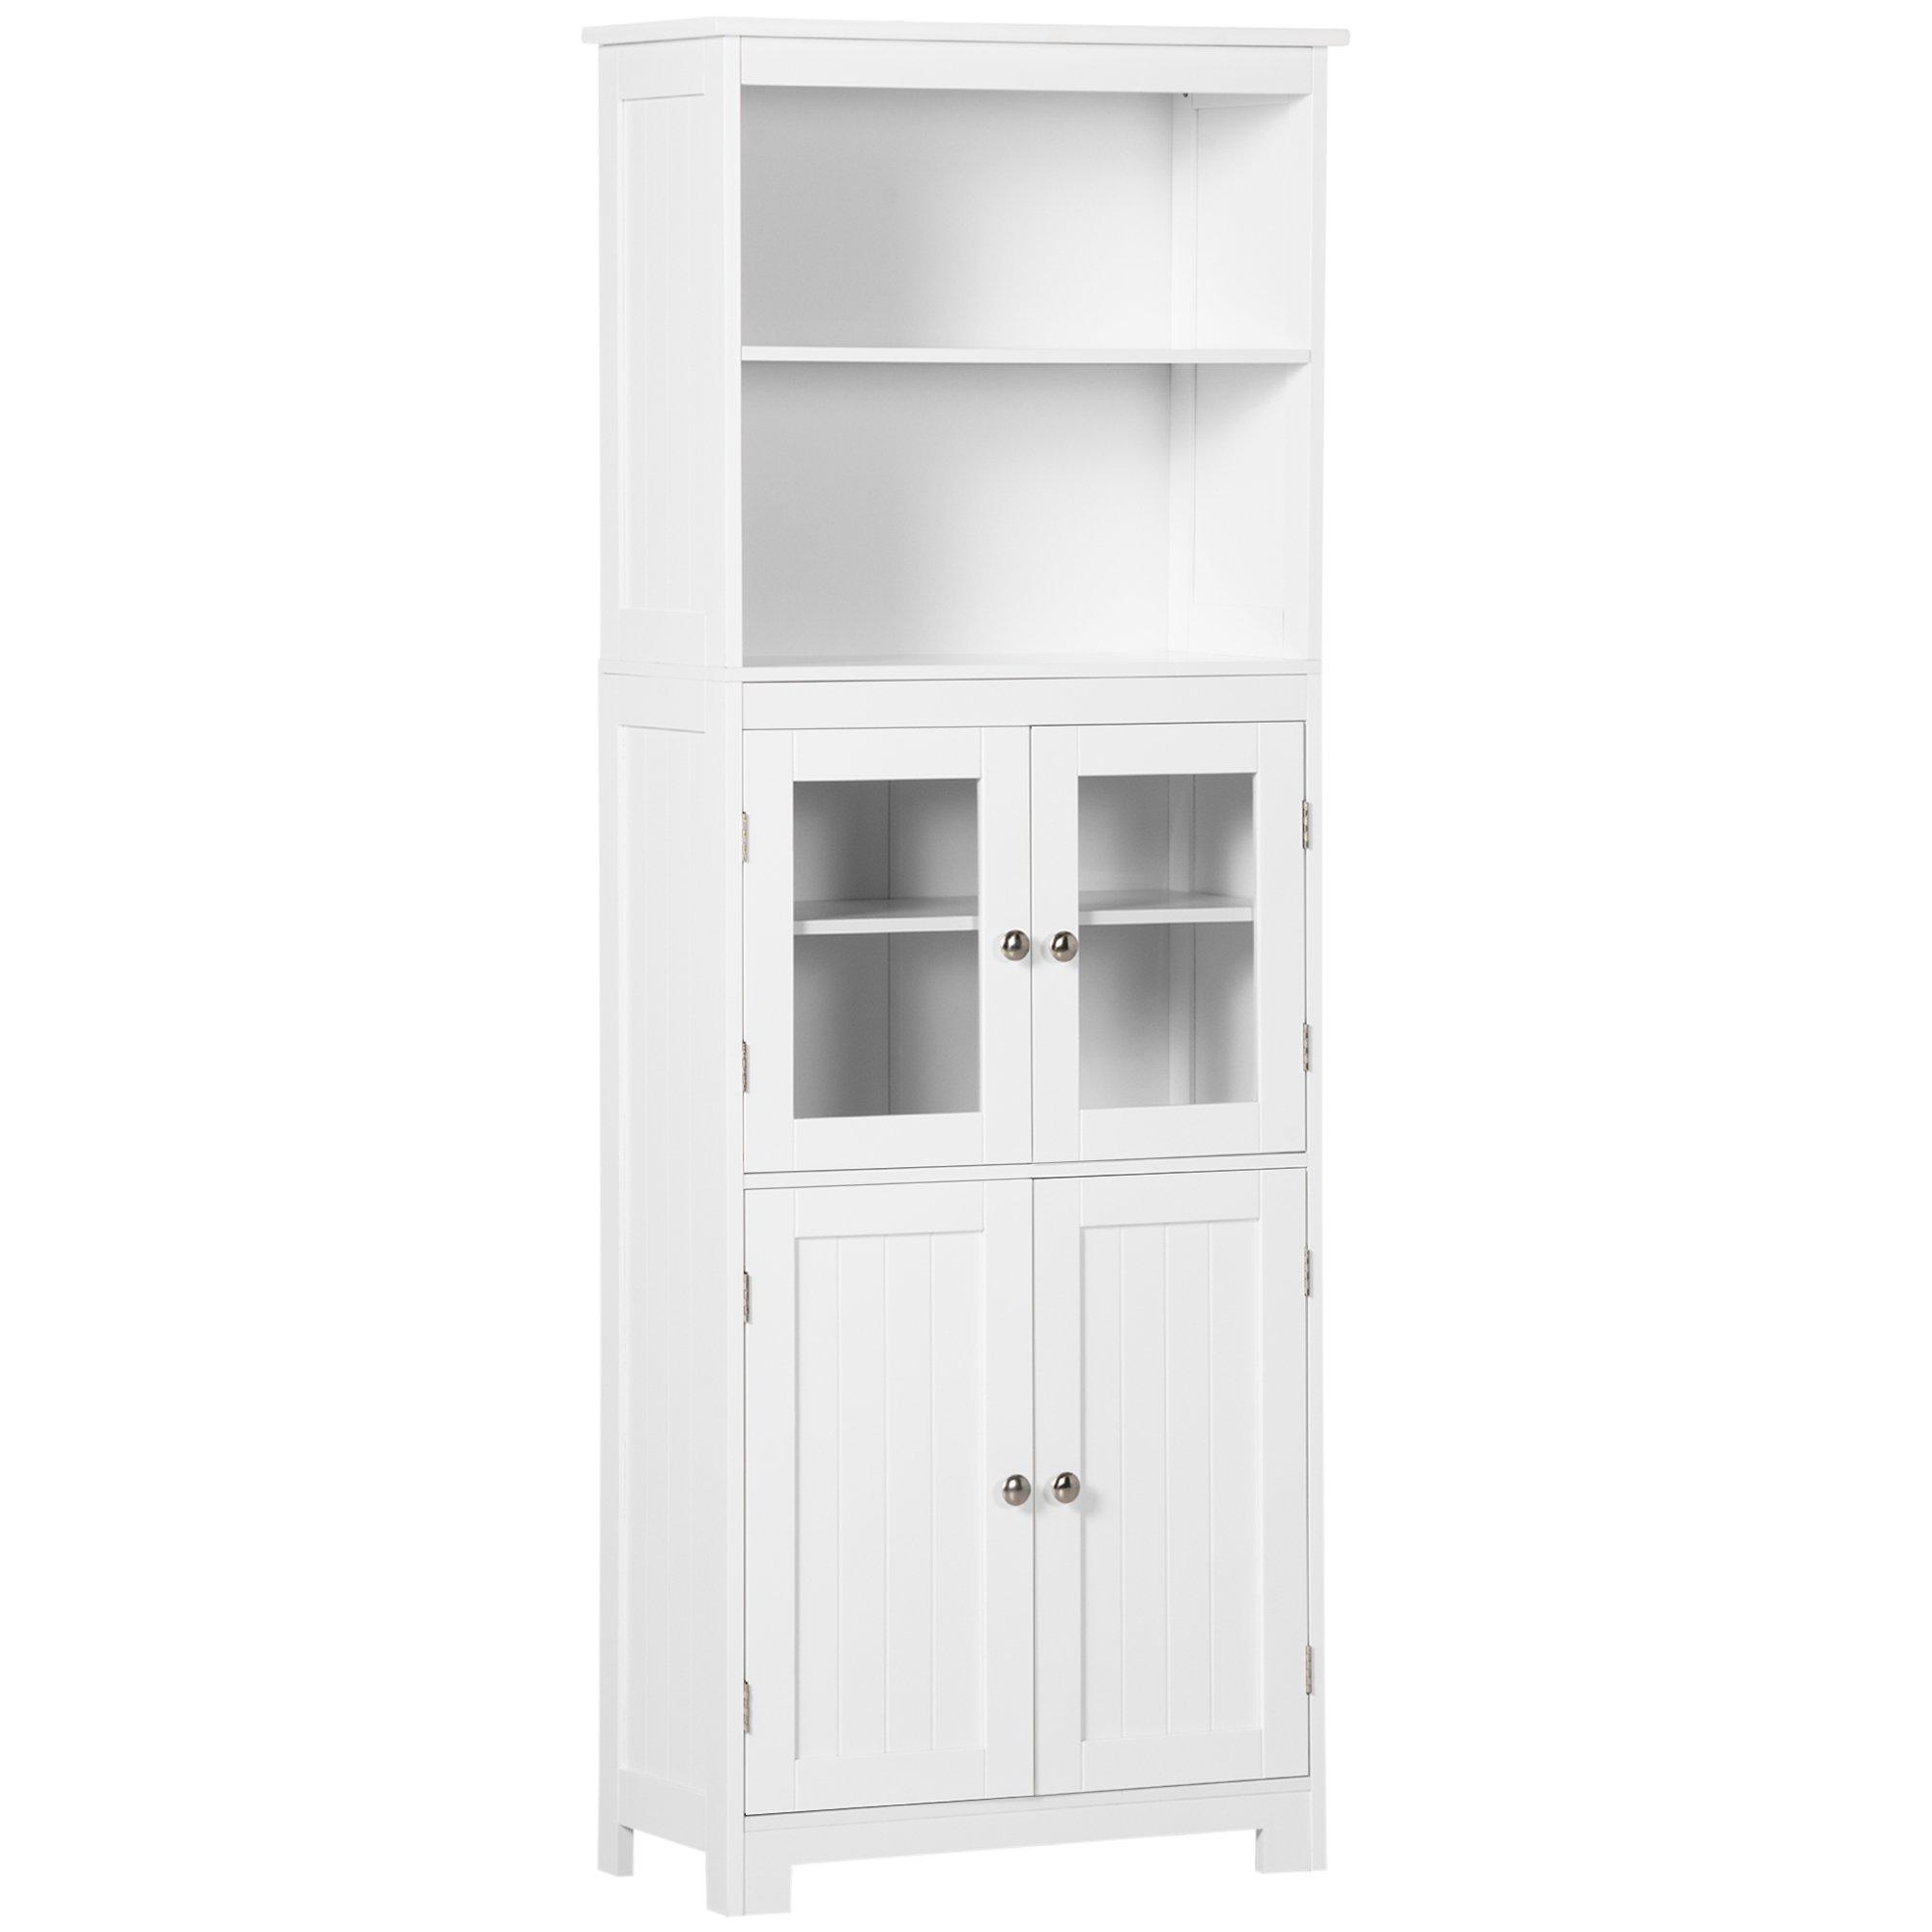 162cm Kitchen Cupboard Storage Cabinet   Adjustable Shelves